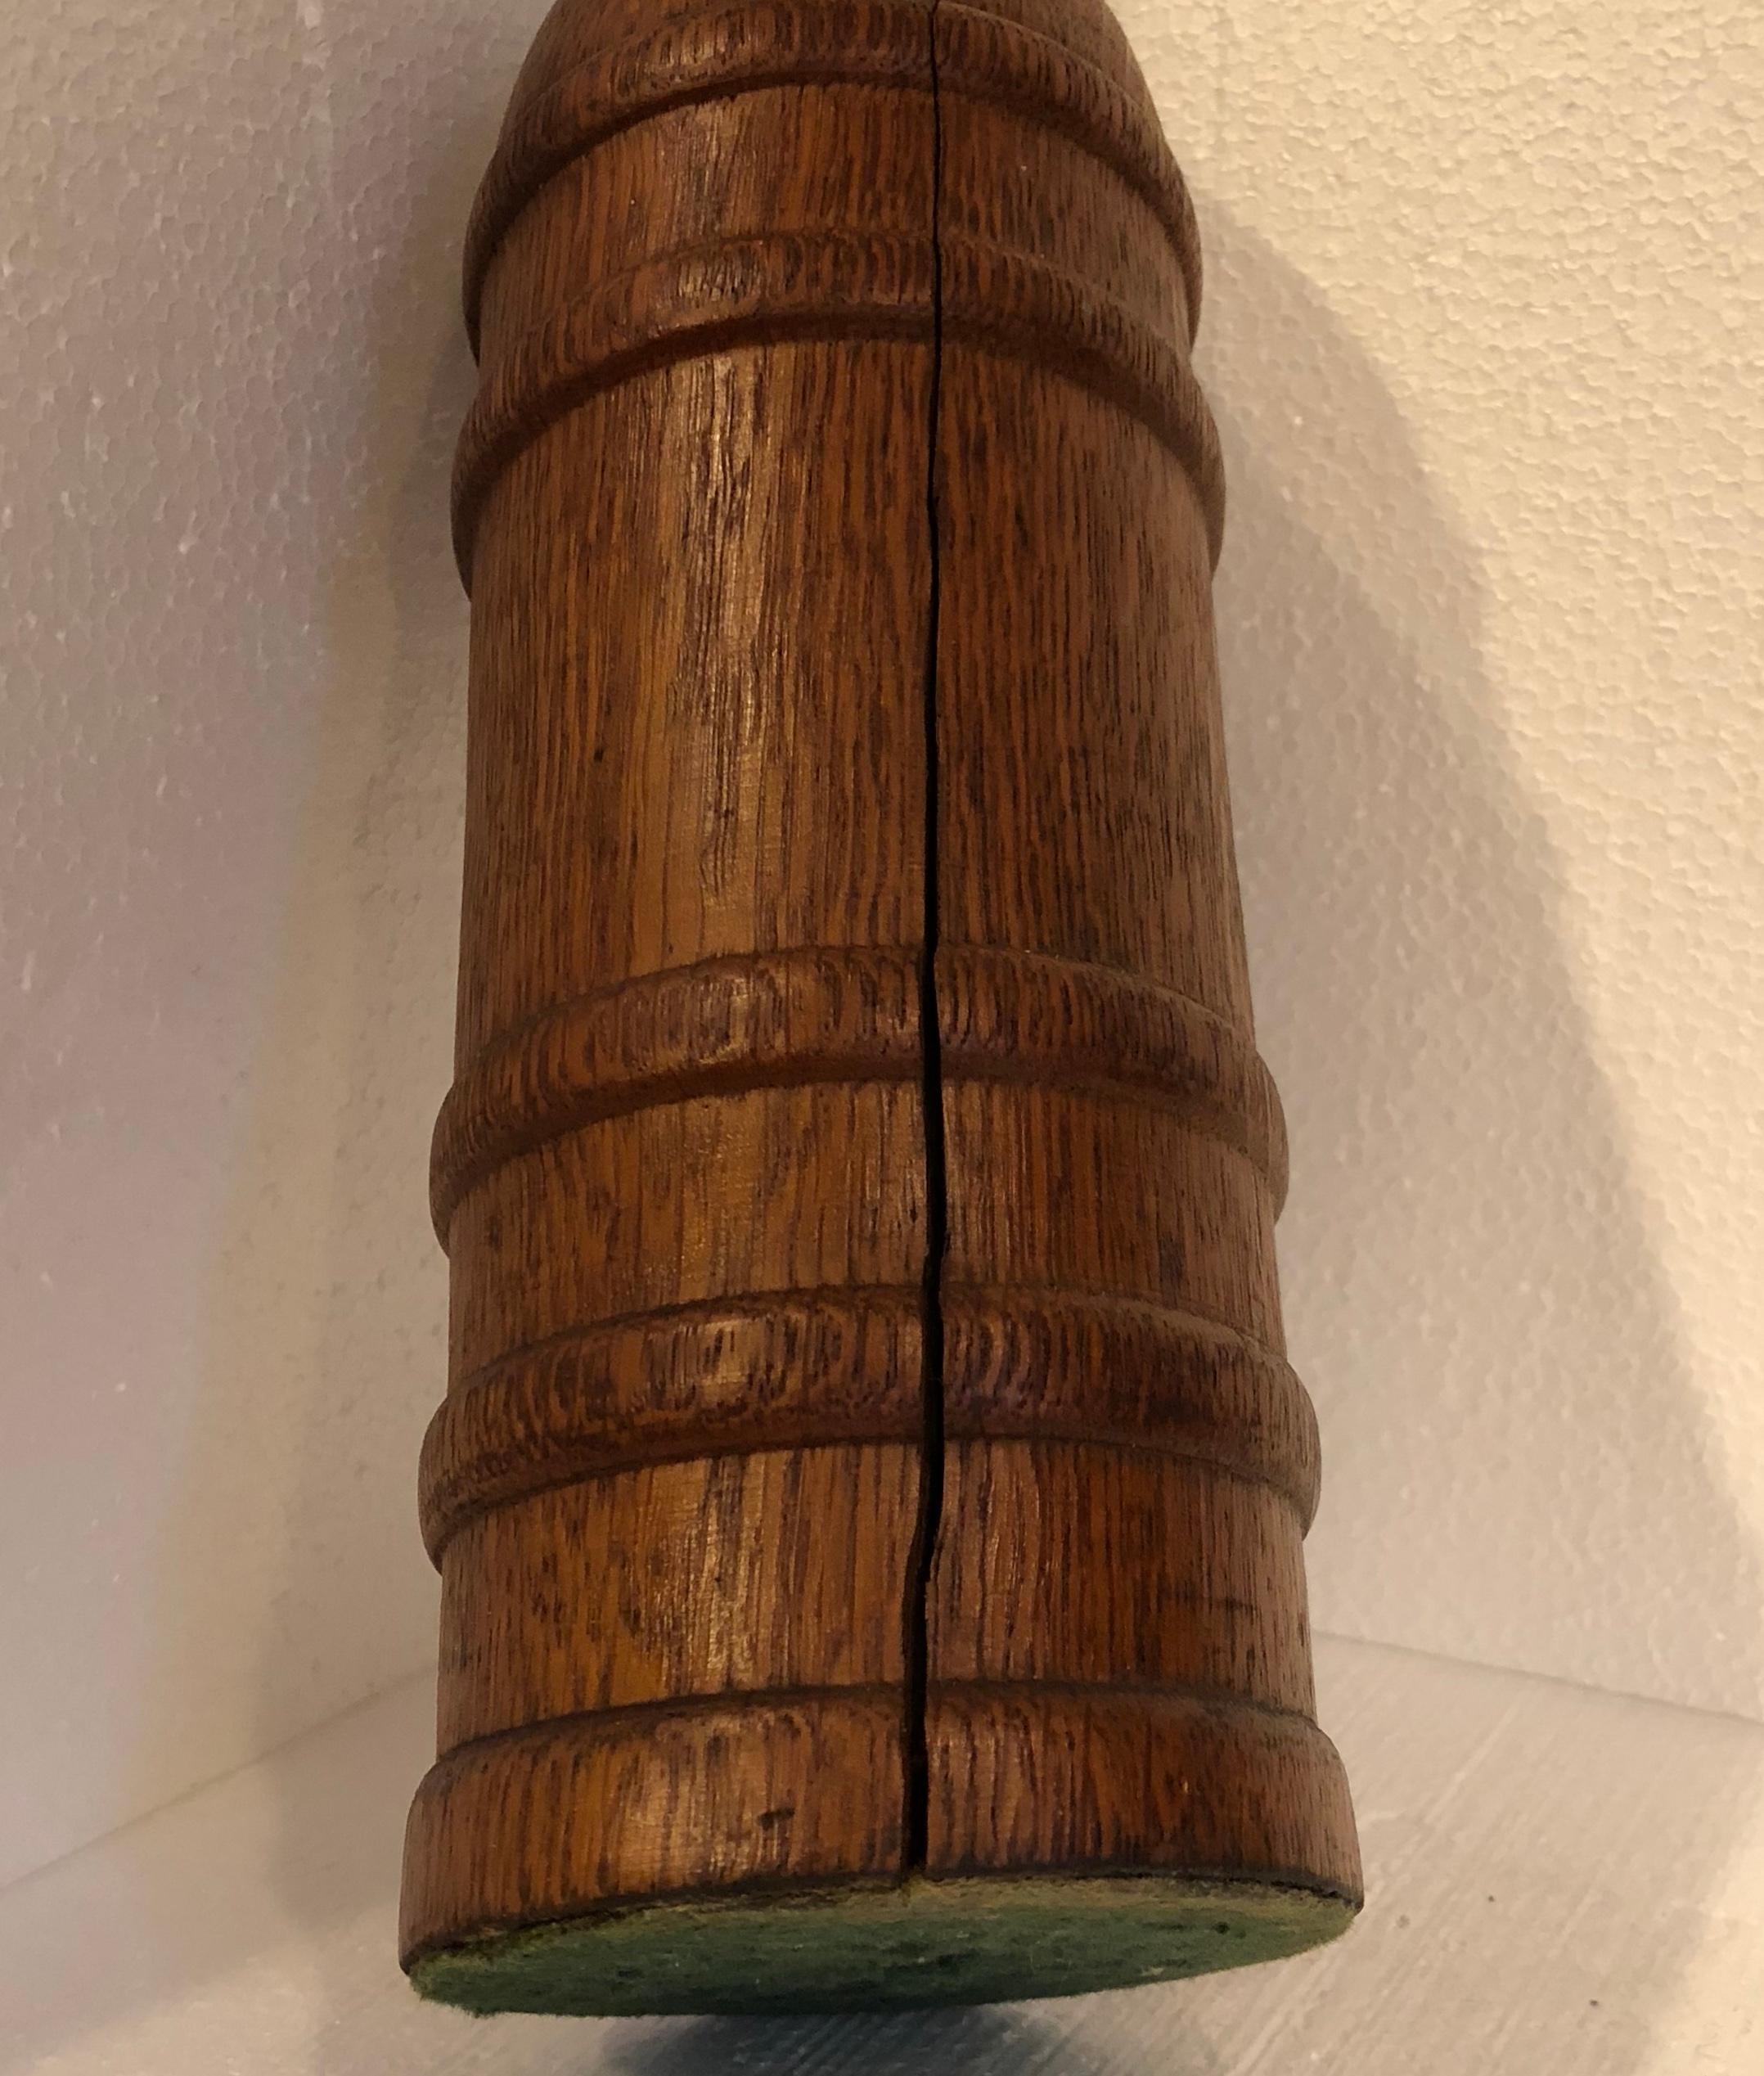 Vintage dekorative hölzerne Dekanter Flasche (Holz)